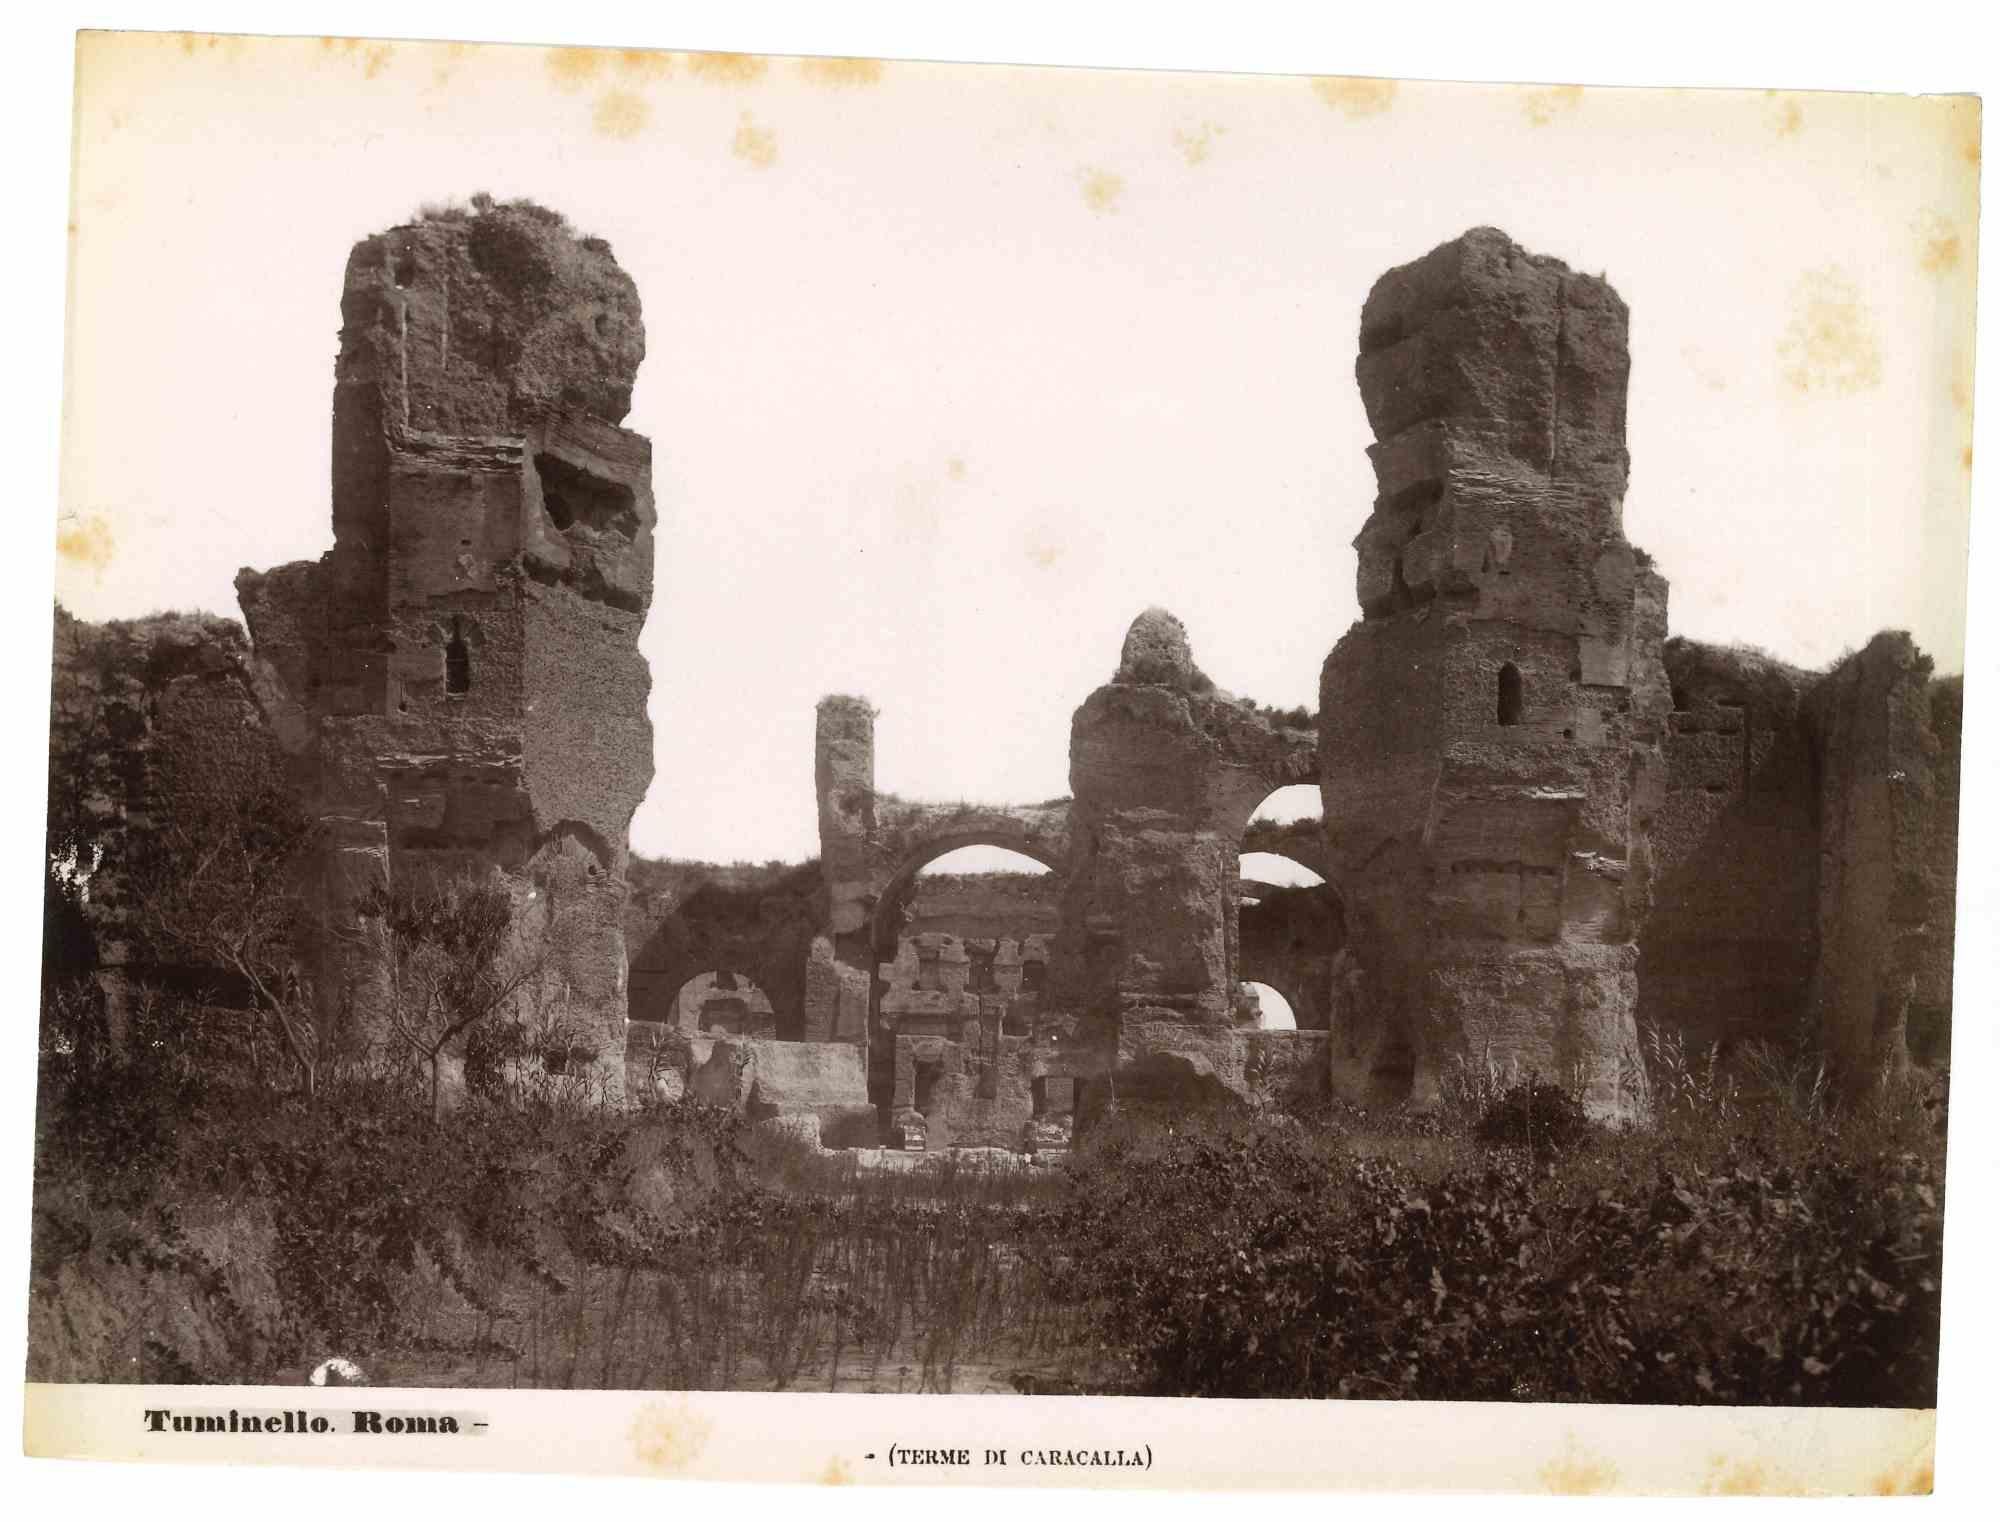 Lodovico Tuminello Landscape Photograph - Baths of Caracalla - Vintage Photo - Late 19th Century